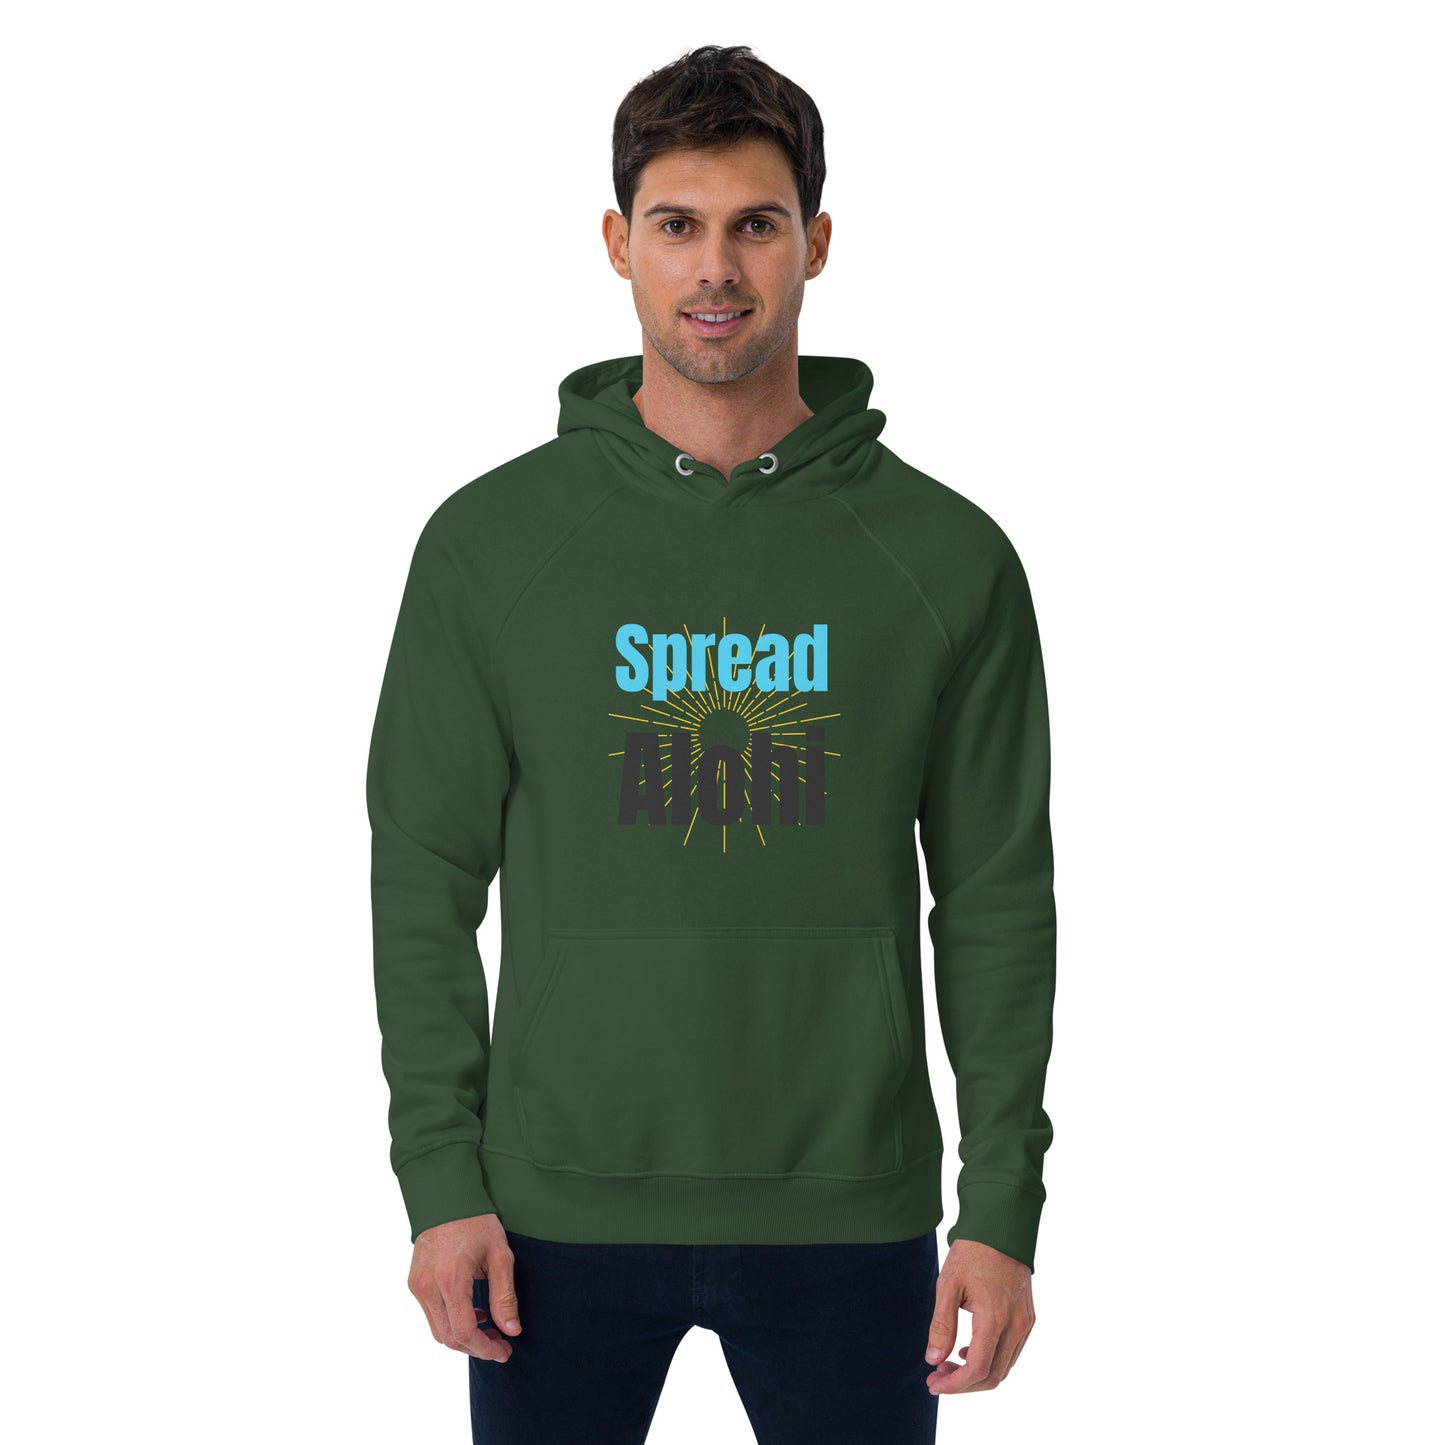 Spread alohi hoodie